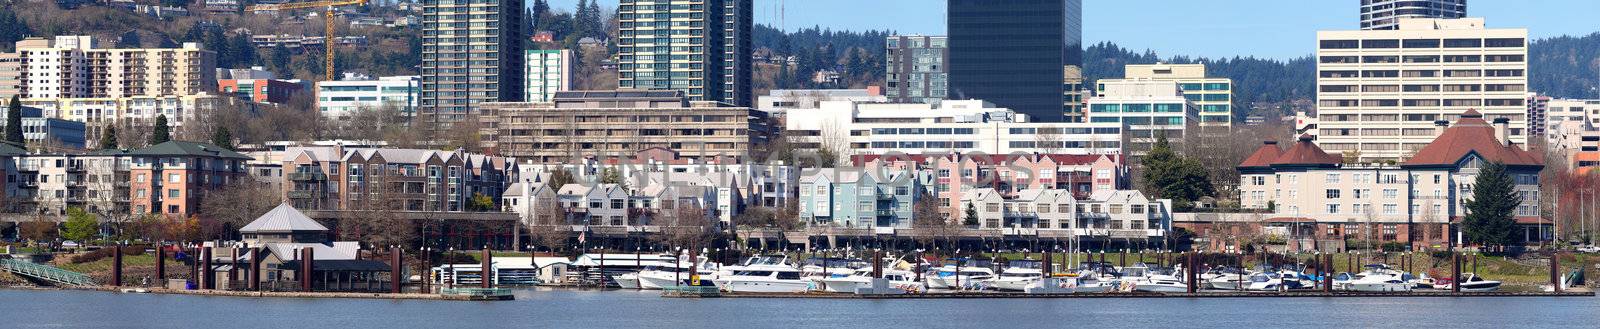 The waterfront marina panorama, Portland Oregon. by Rigucci